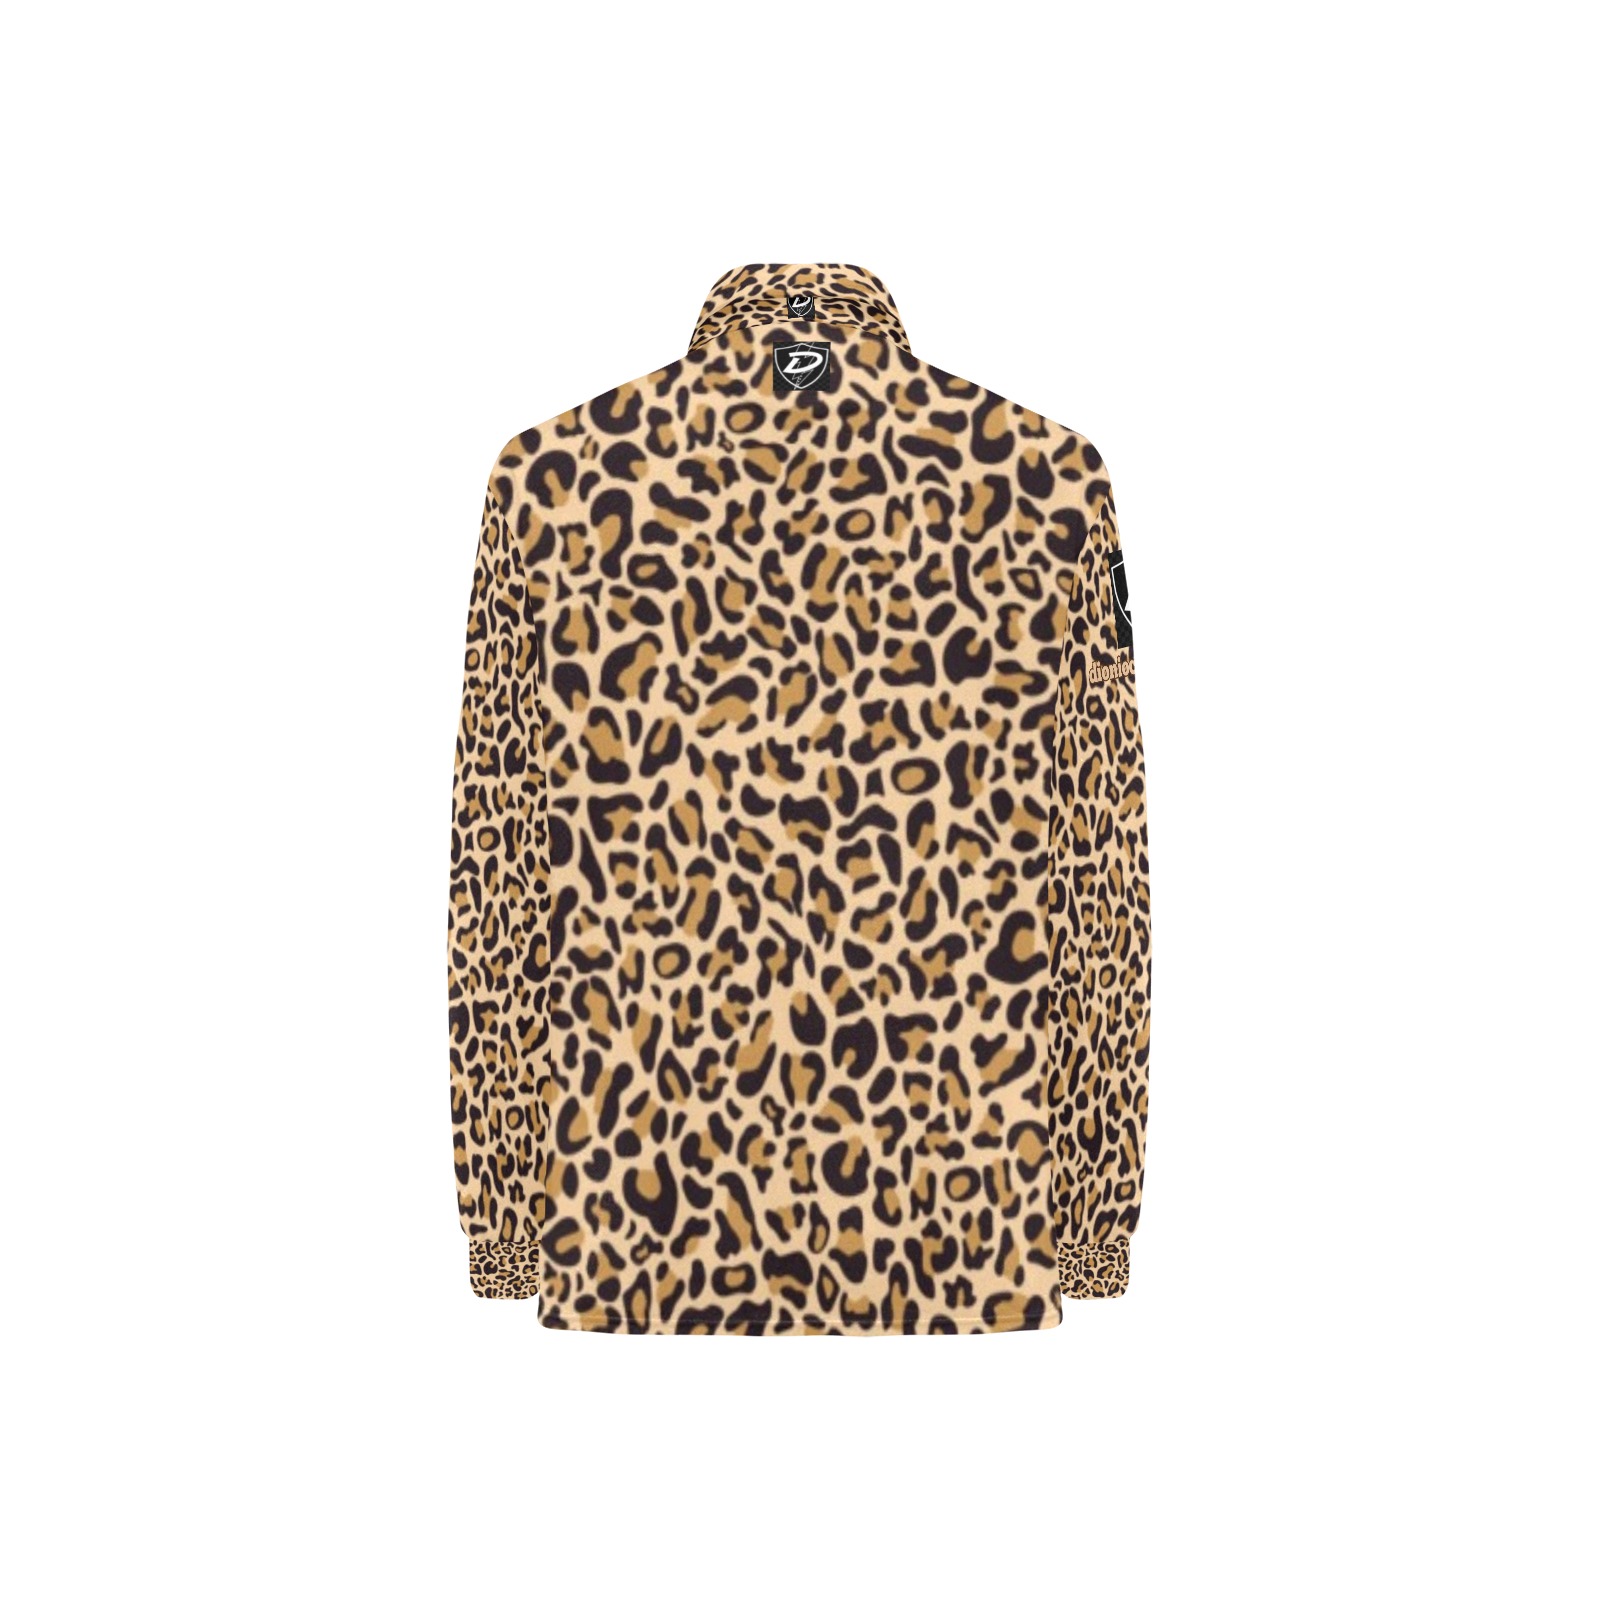 DIONIO Clothing - Ladies' Cheetah Long Sleeve Polo Shirt Women's Long Sleeve Polo Shirt (Model T73)